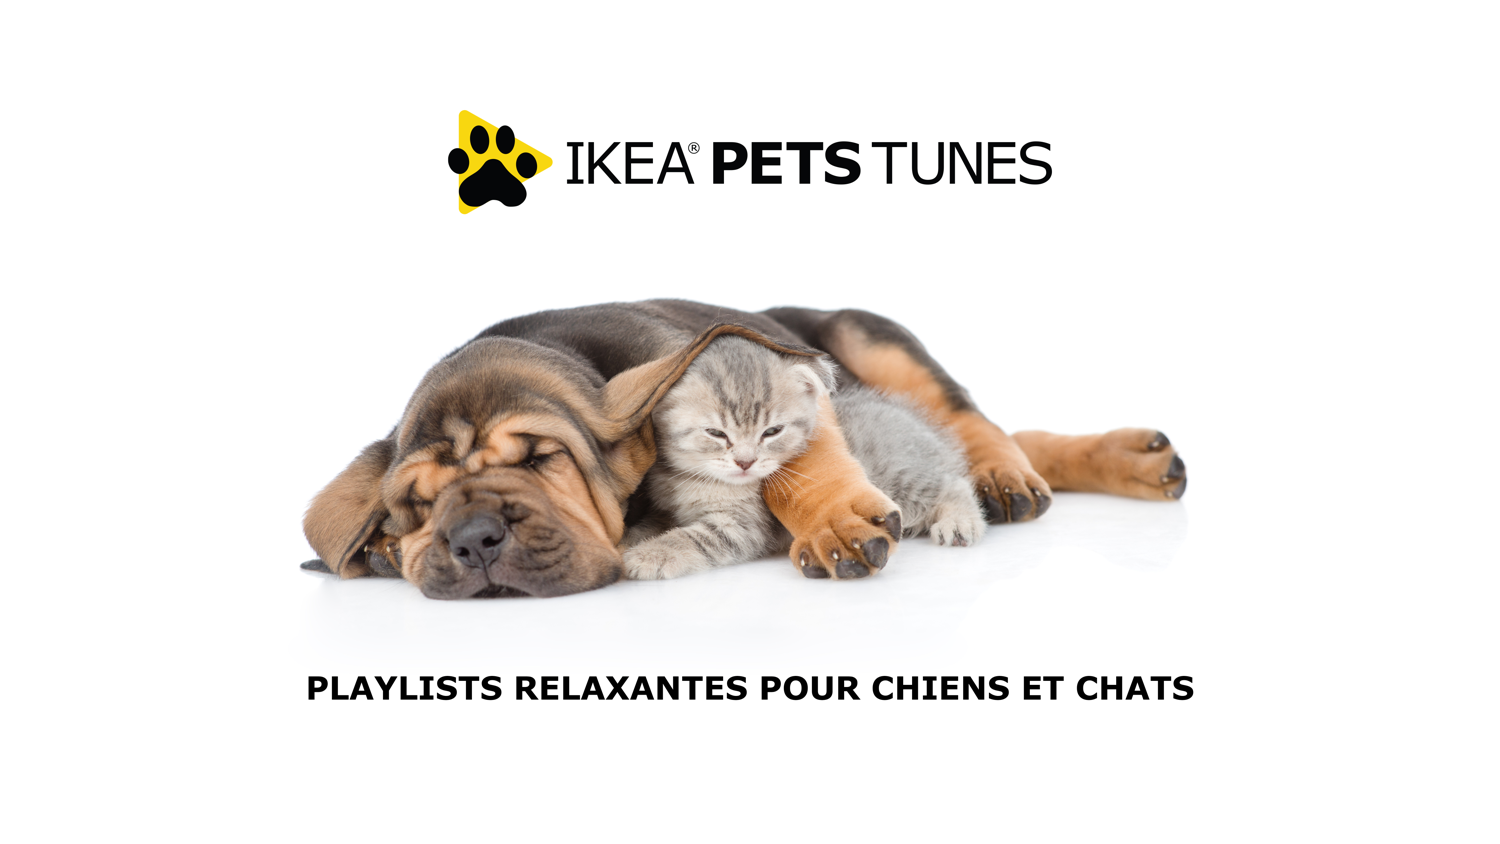 IKEA Pets Tunes key visual